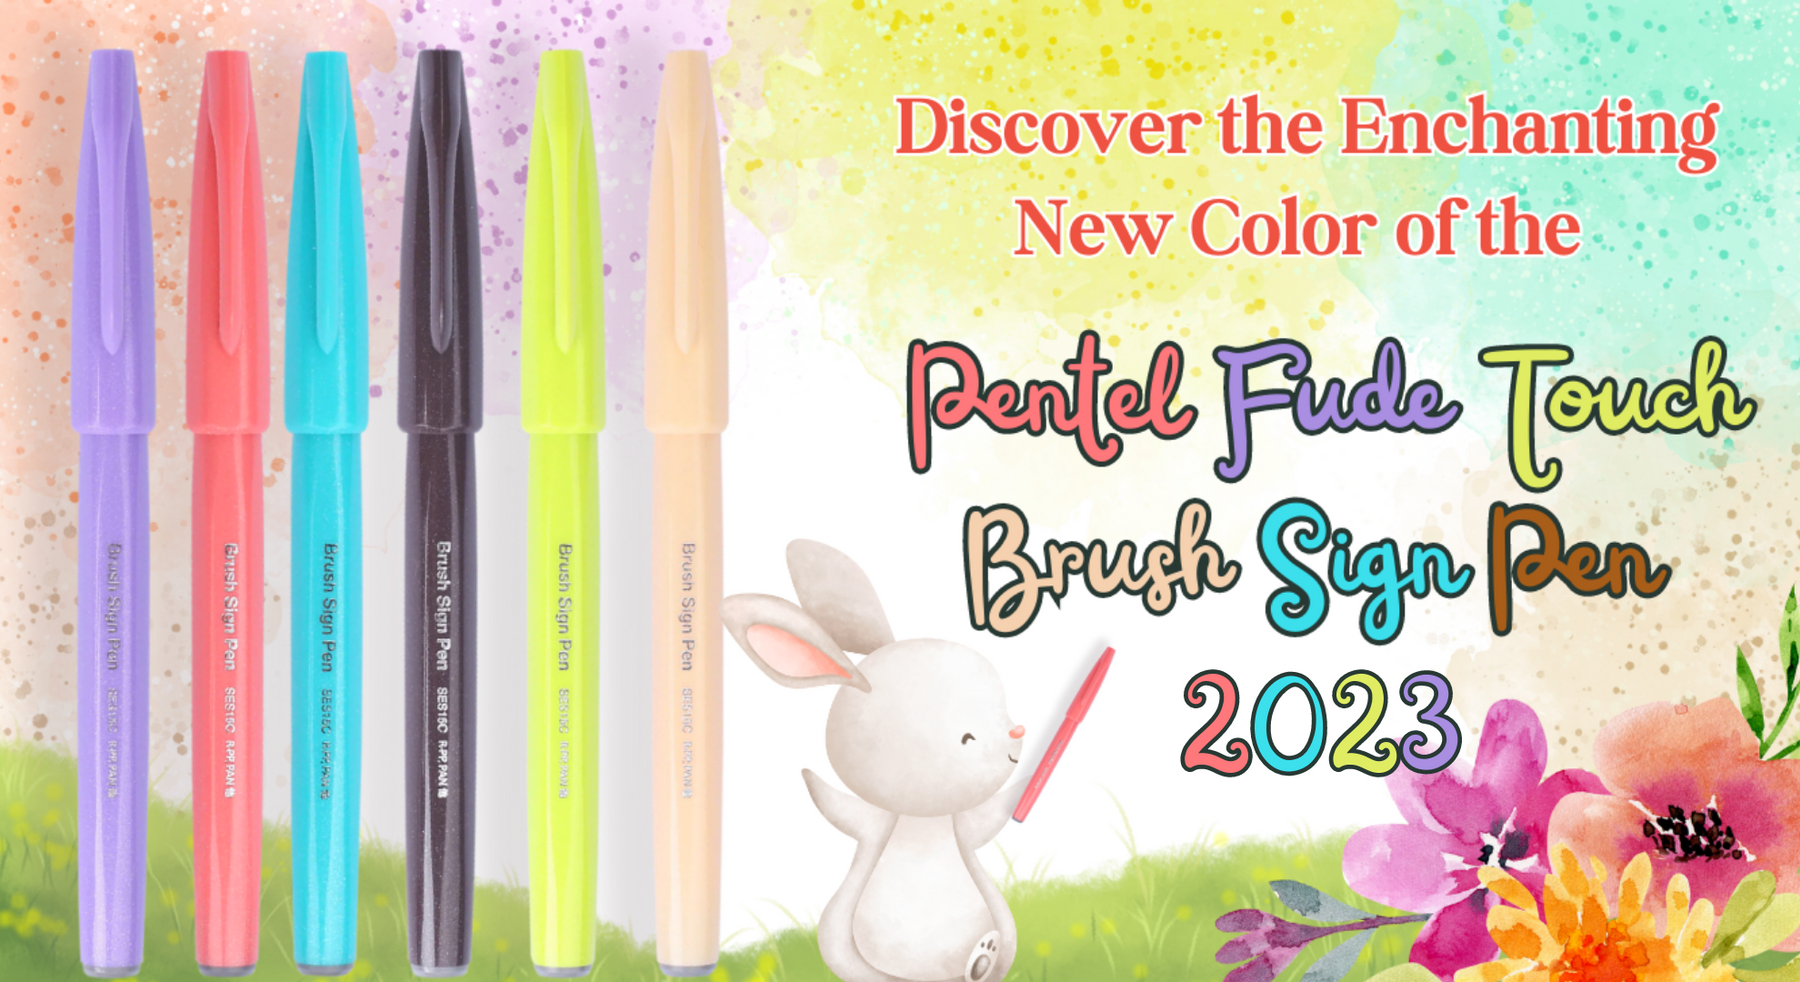 Pentel Fude Touch Brush Sign Pen 2023